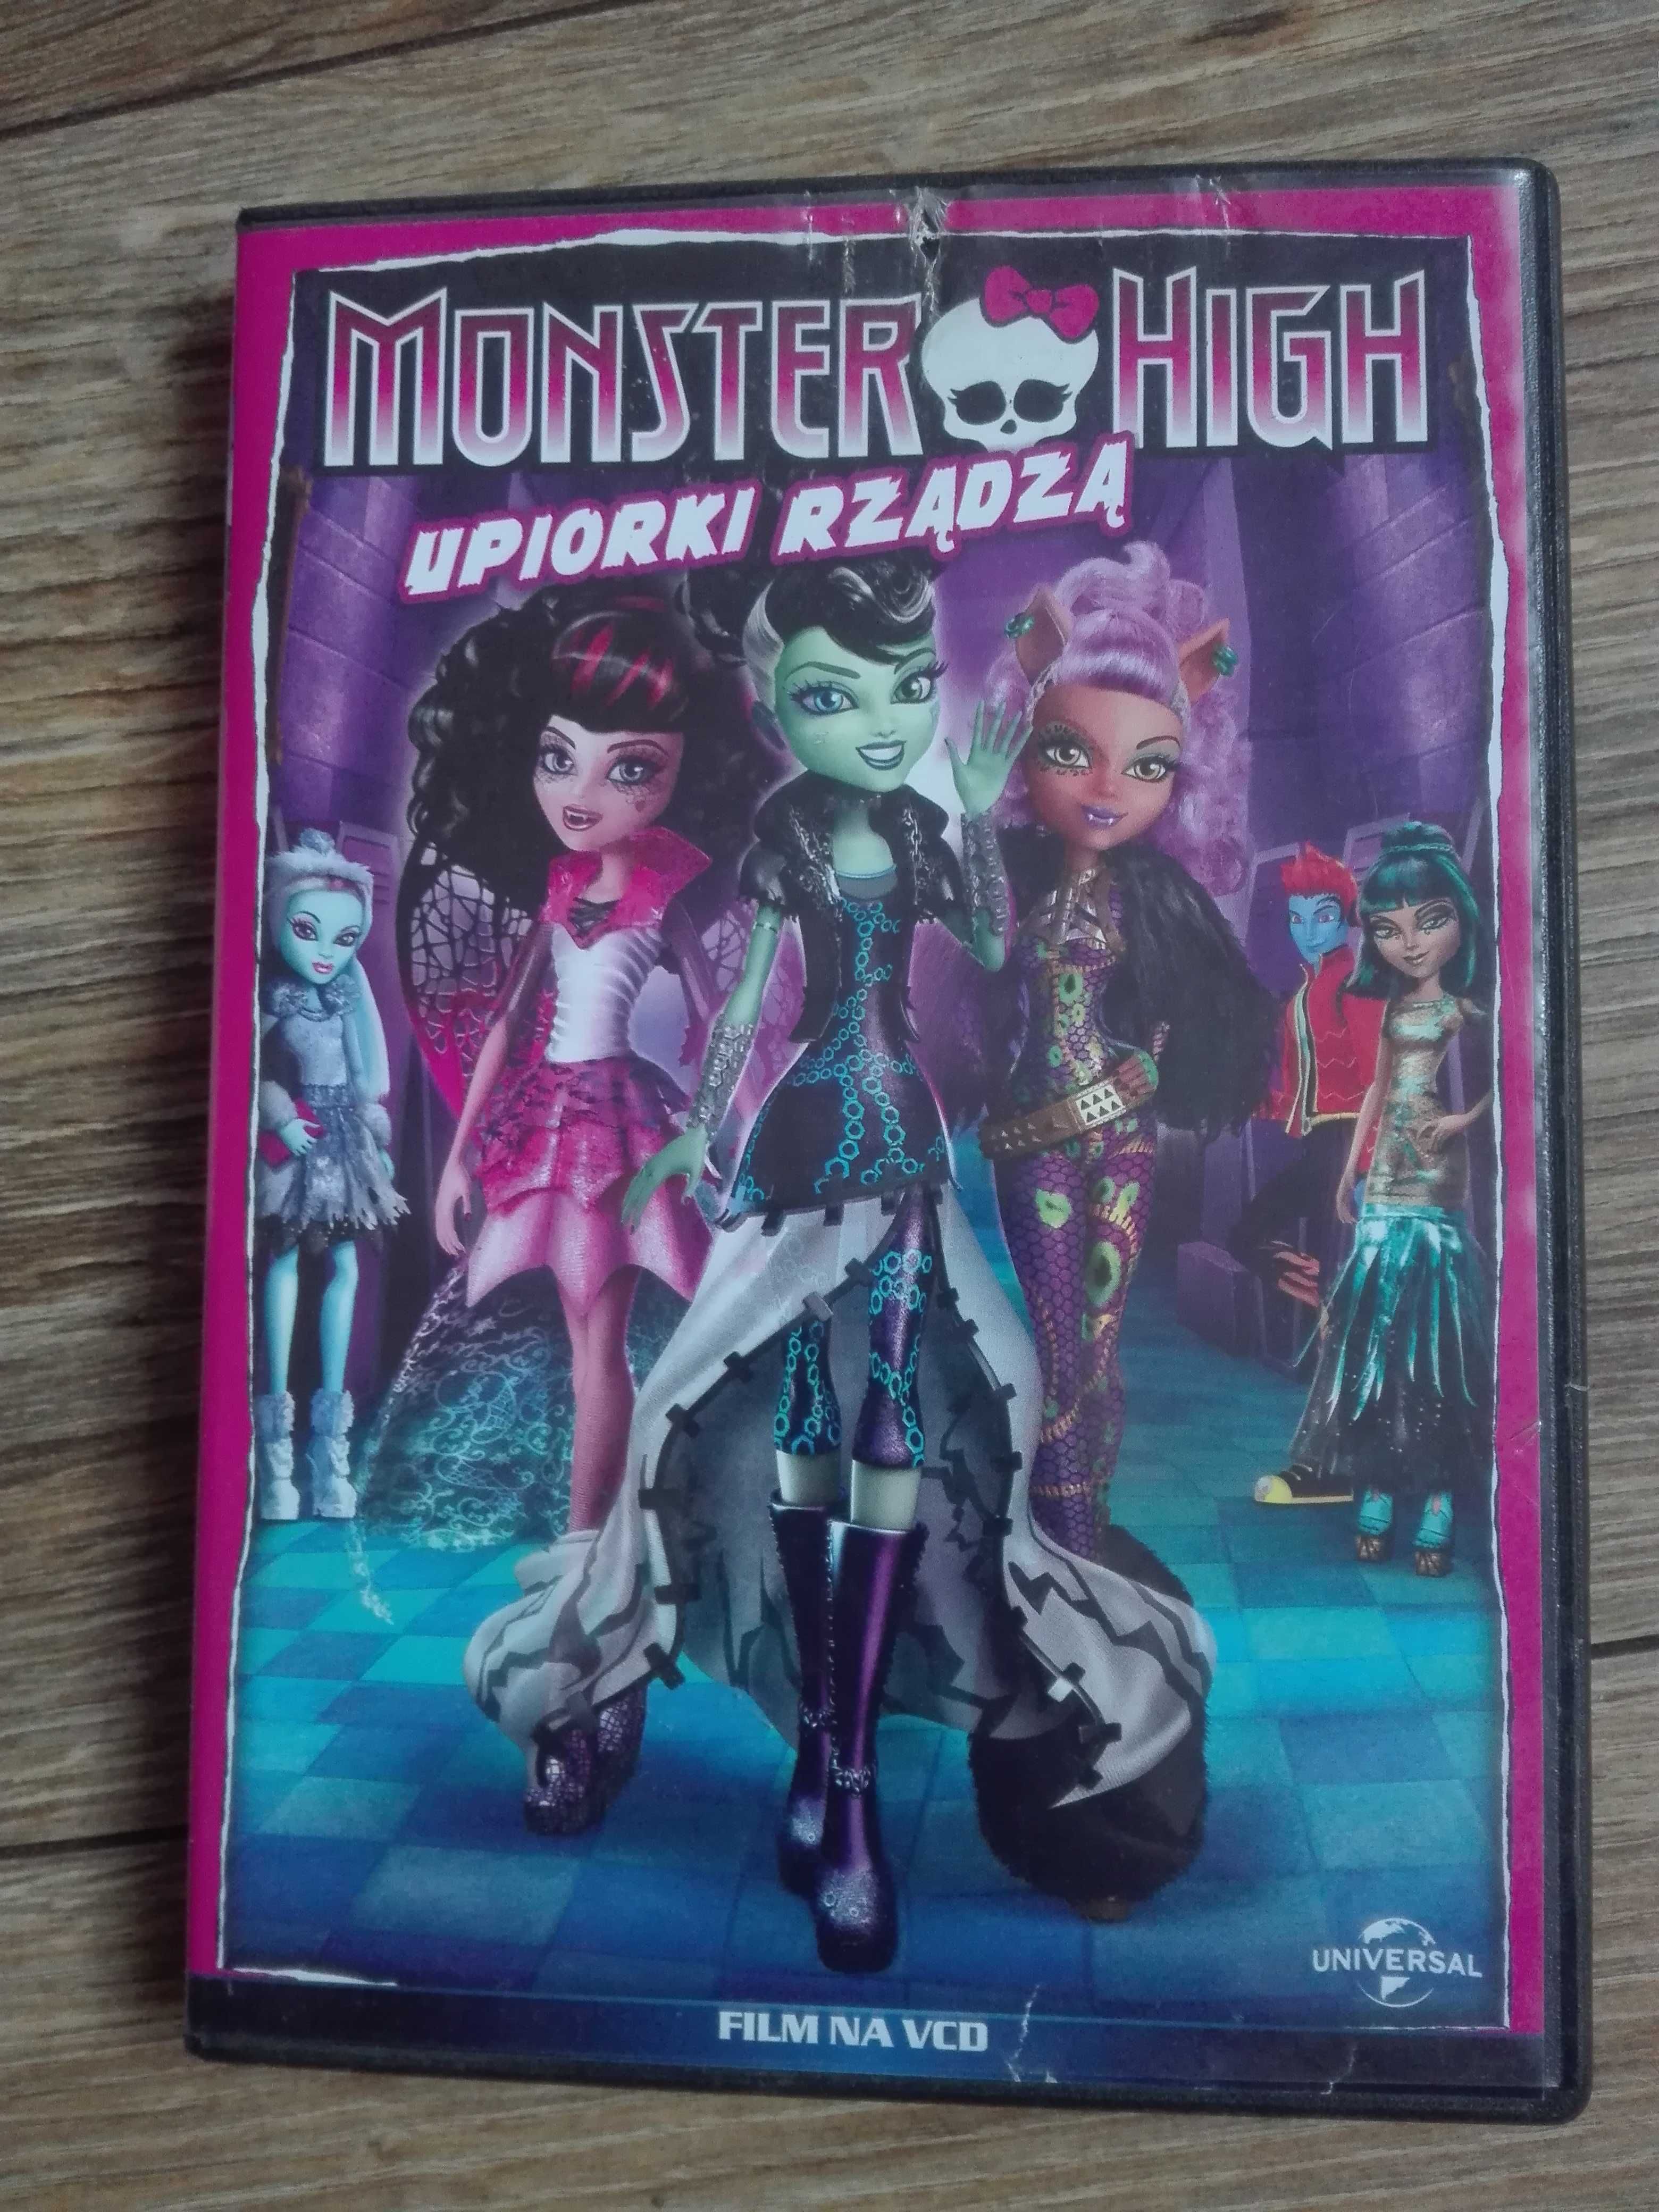 Monster High Upiorki rządzą VCD